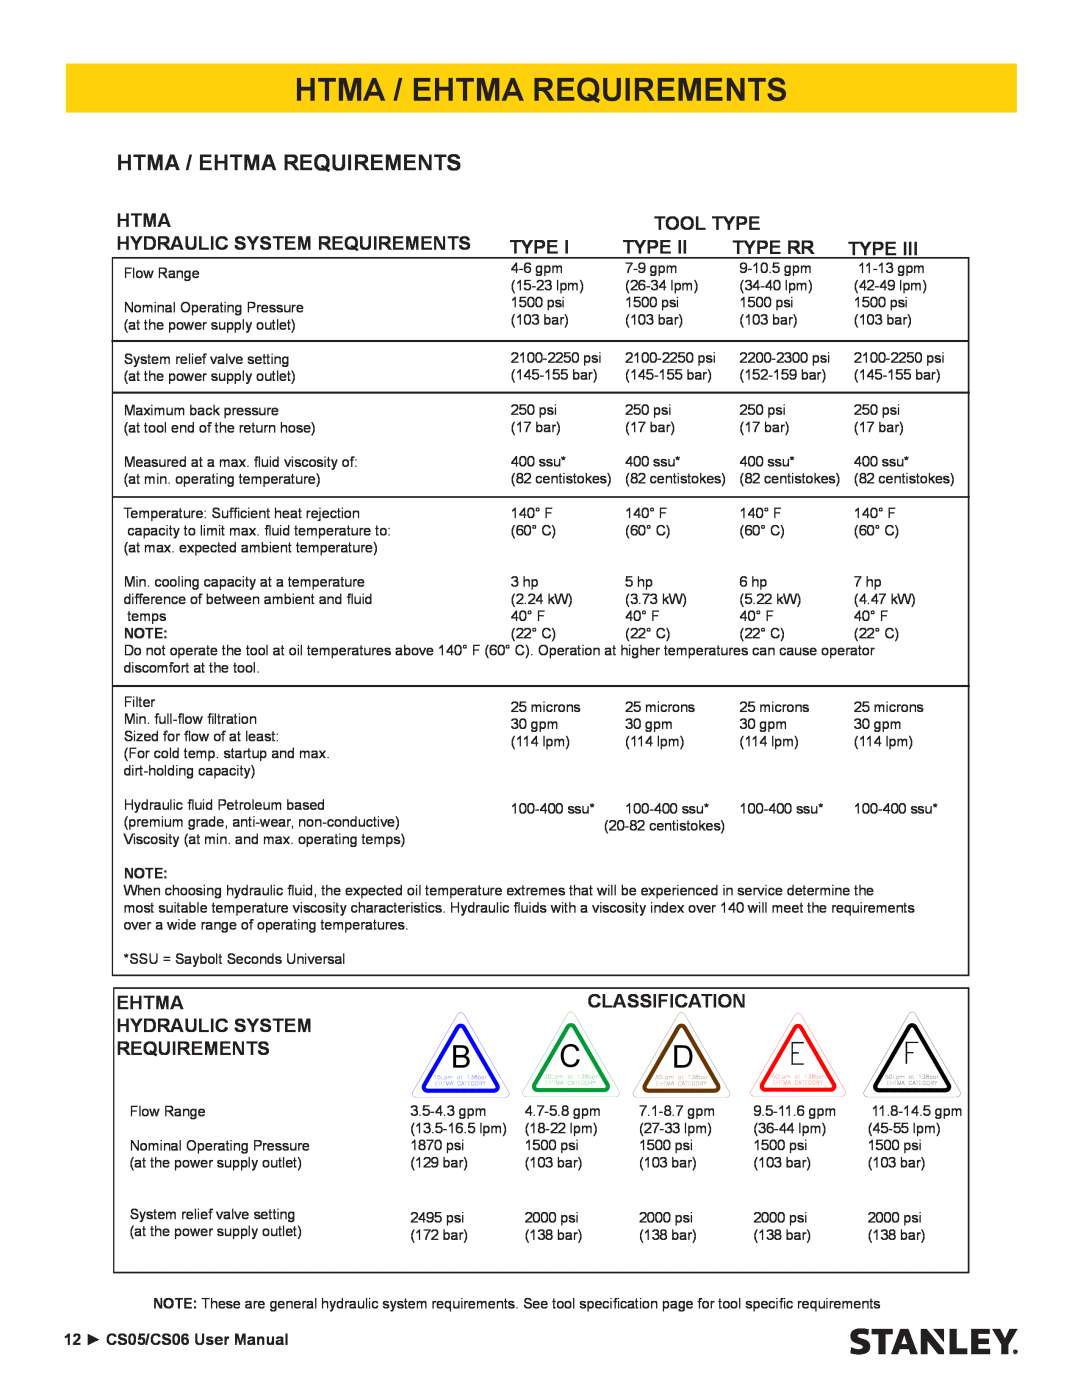 Stanley Black & Decker CS06, CS05 manual Htma / Ehtma Requirements 